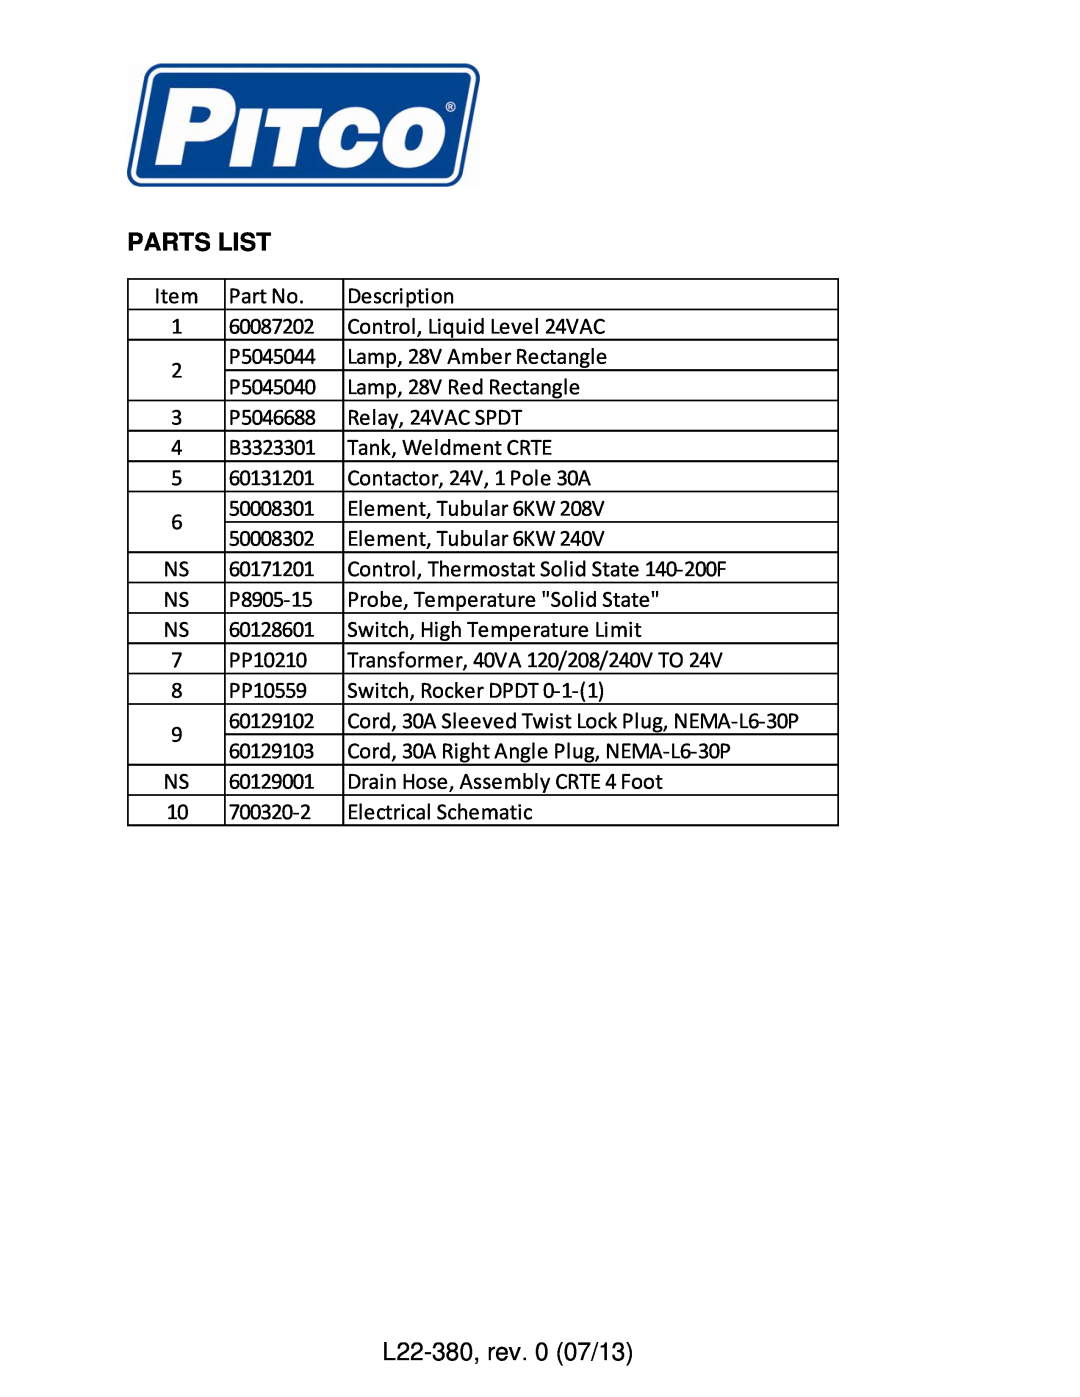 Pitco Frialator manual Parts List, L22-380, rev. 0 07/13 